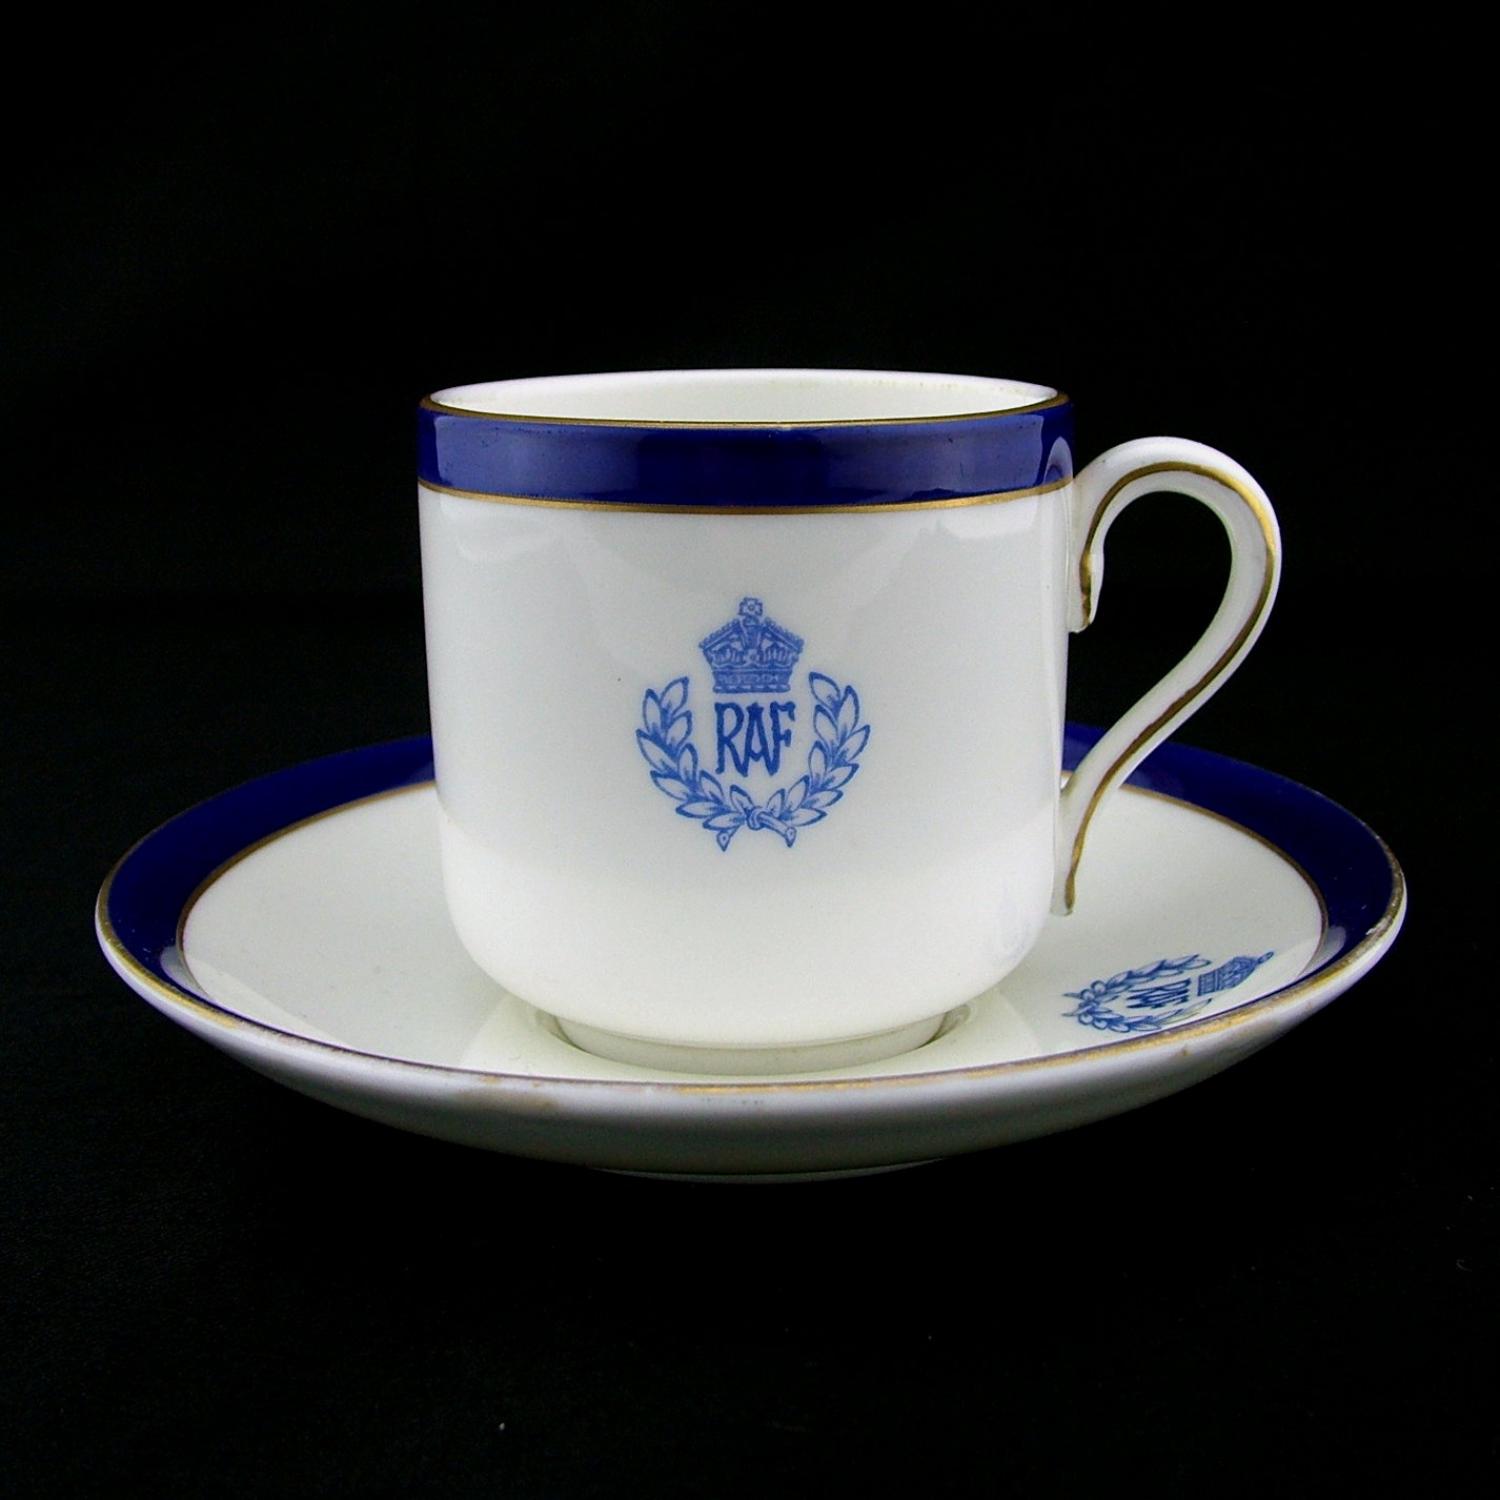 RAF Mess coffee cup & saucer